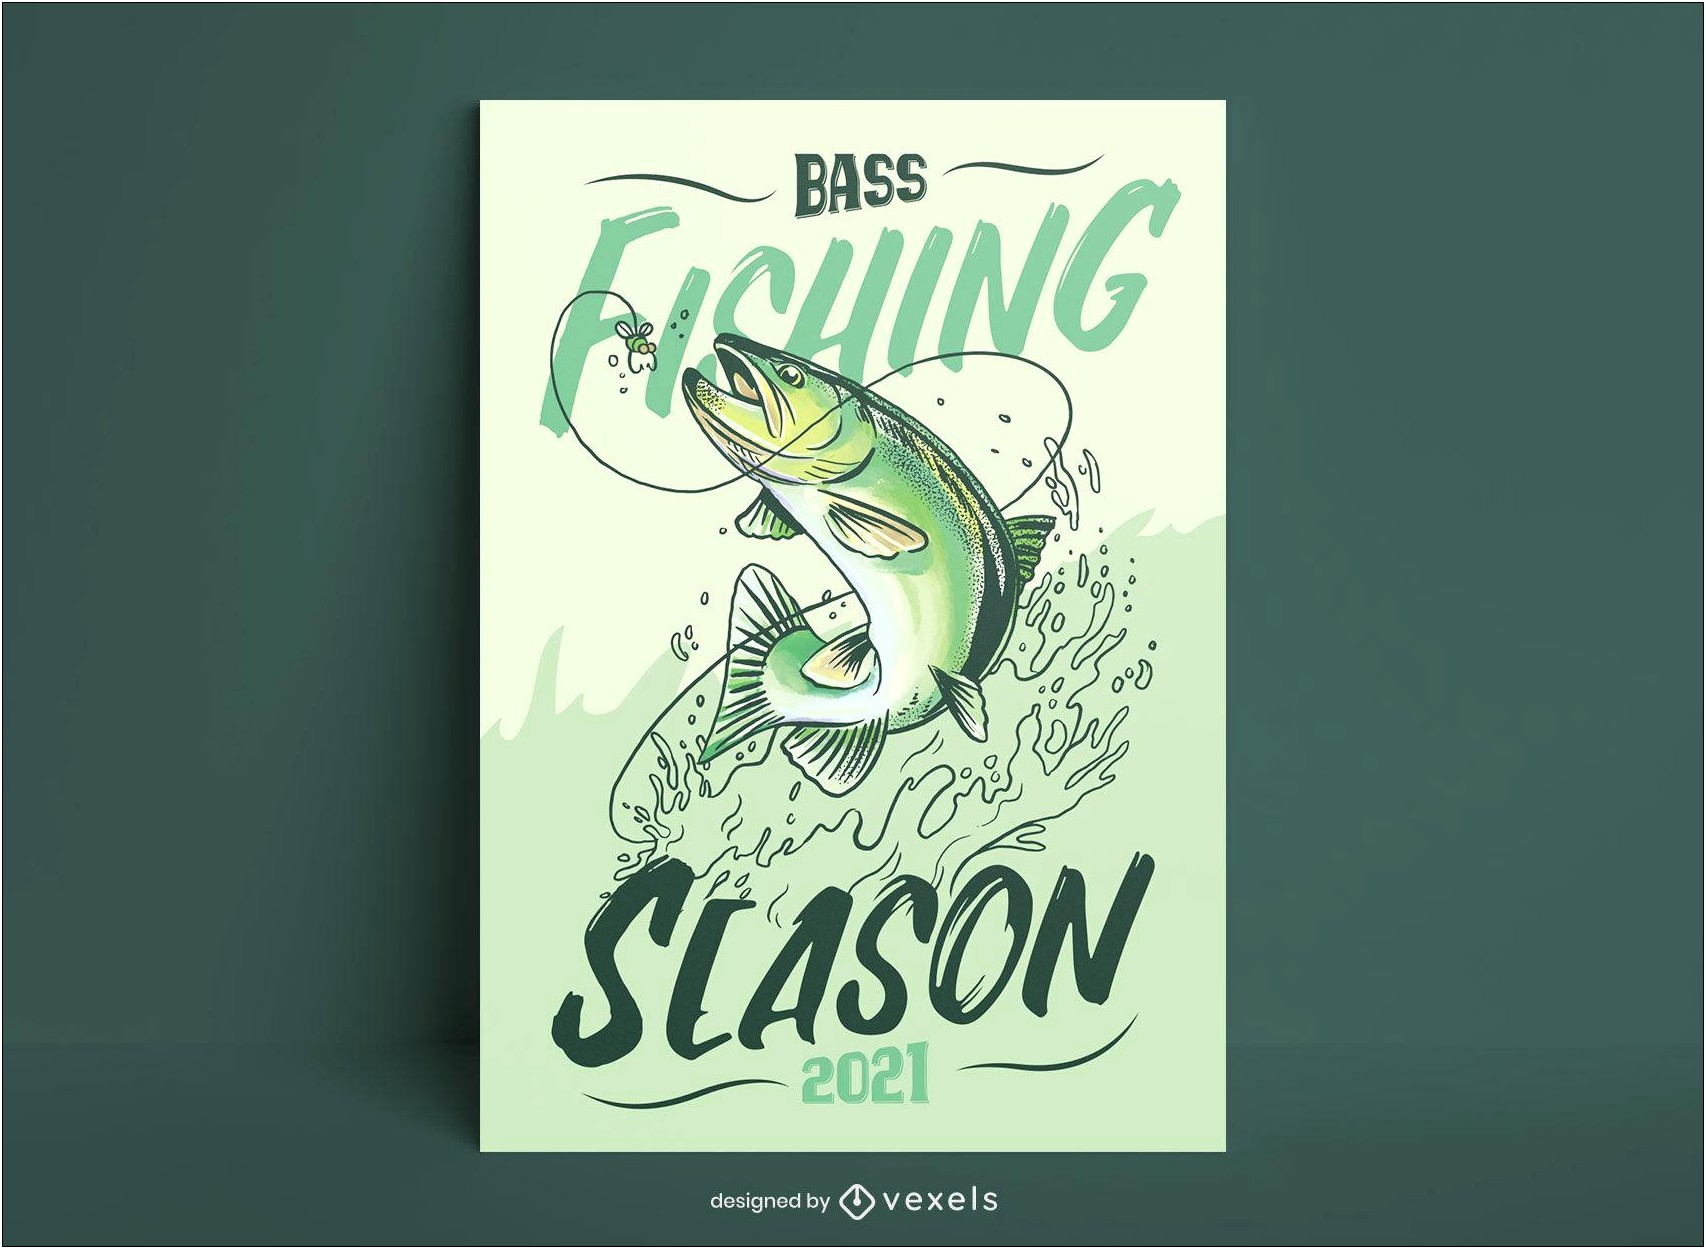 Bass Fishing Tournament Flyer Template Psd Free